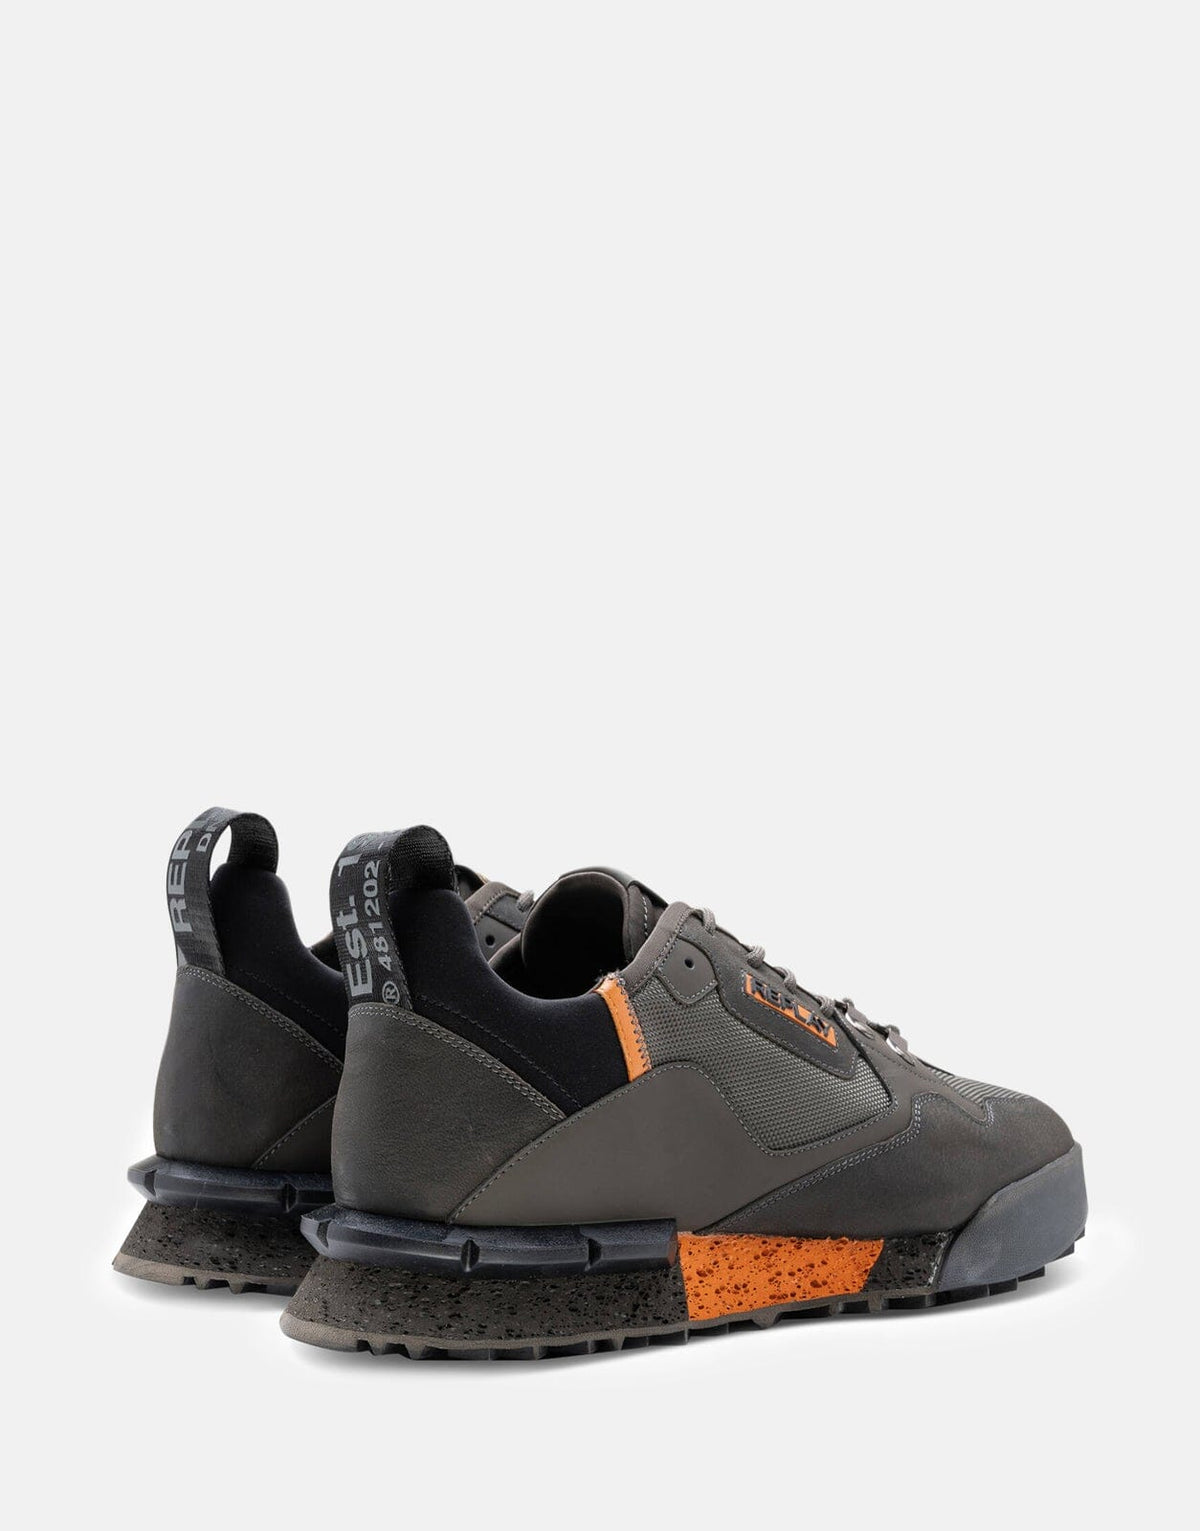 Replay Field Space DK Grey/Orn Sneaker